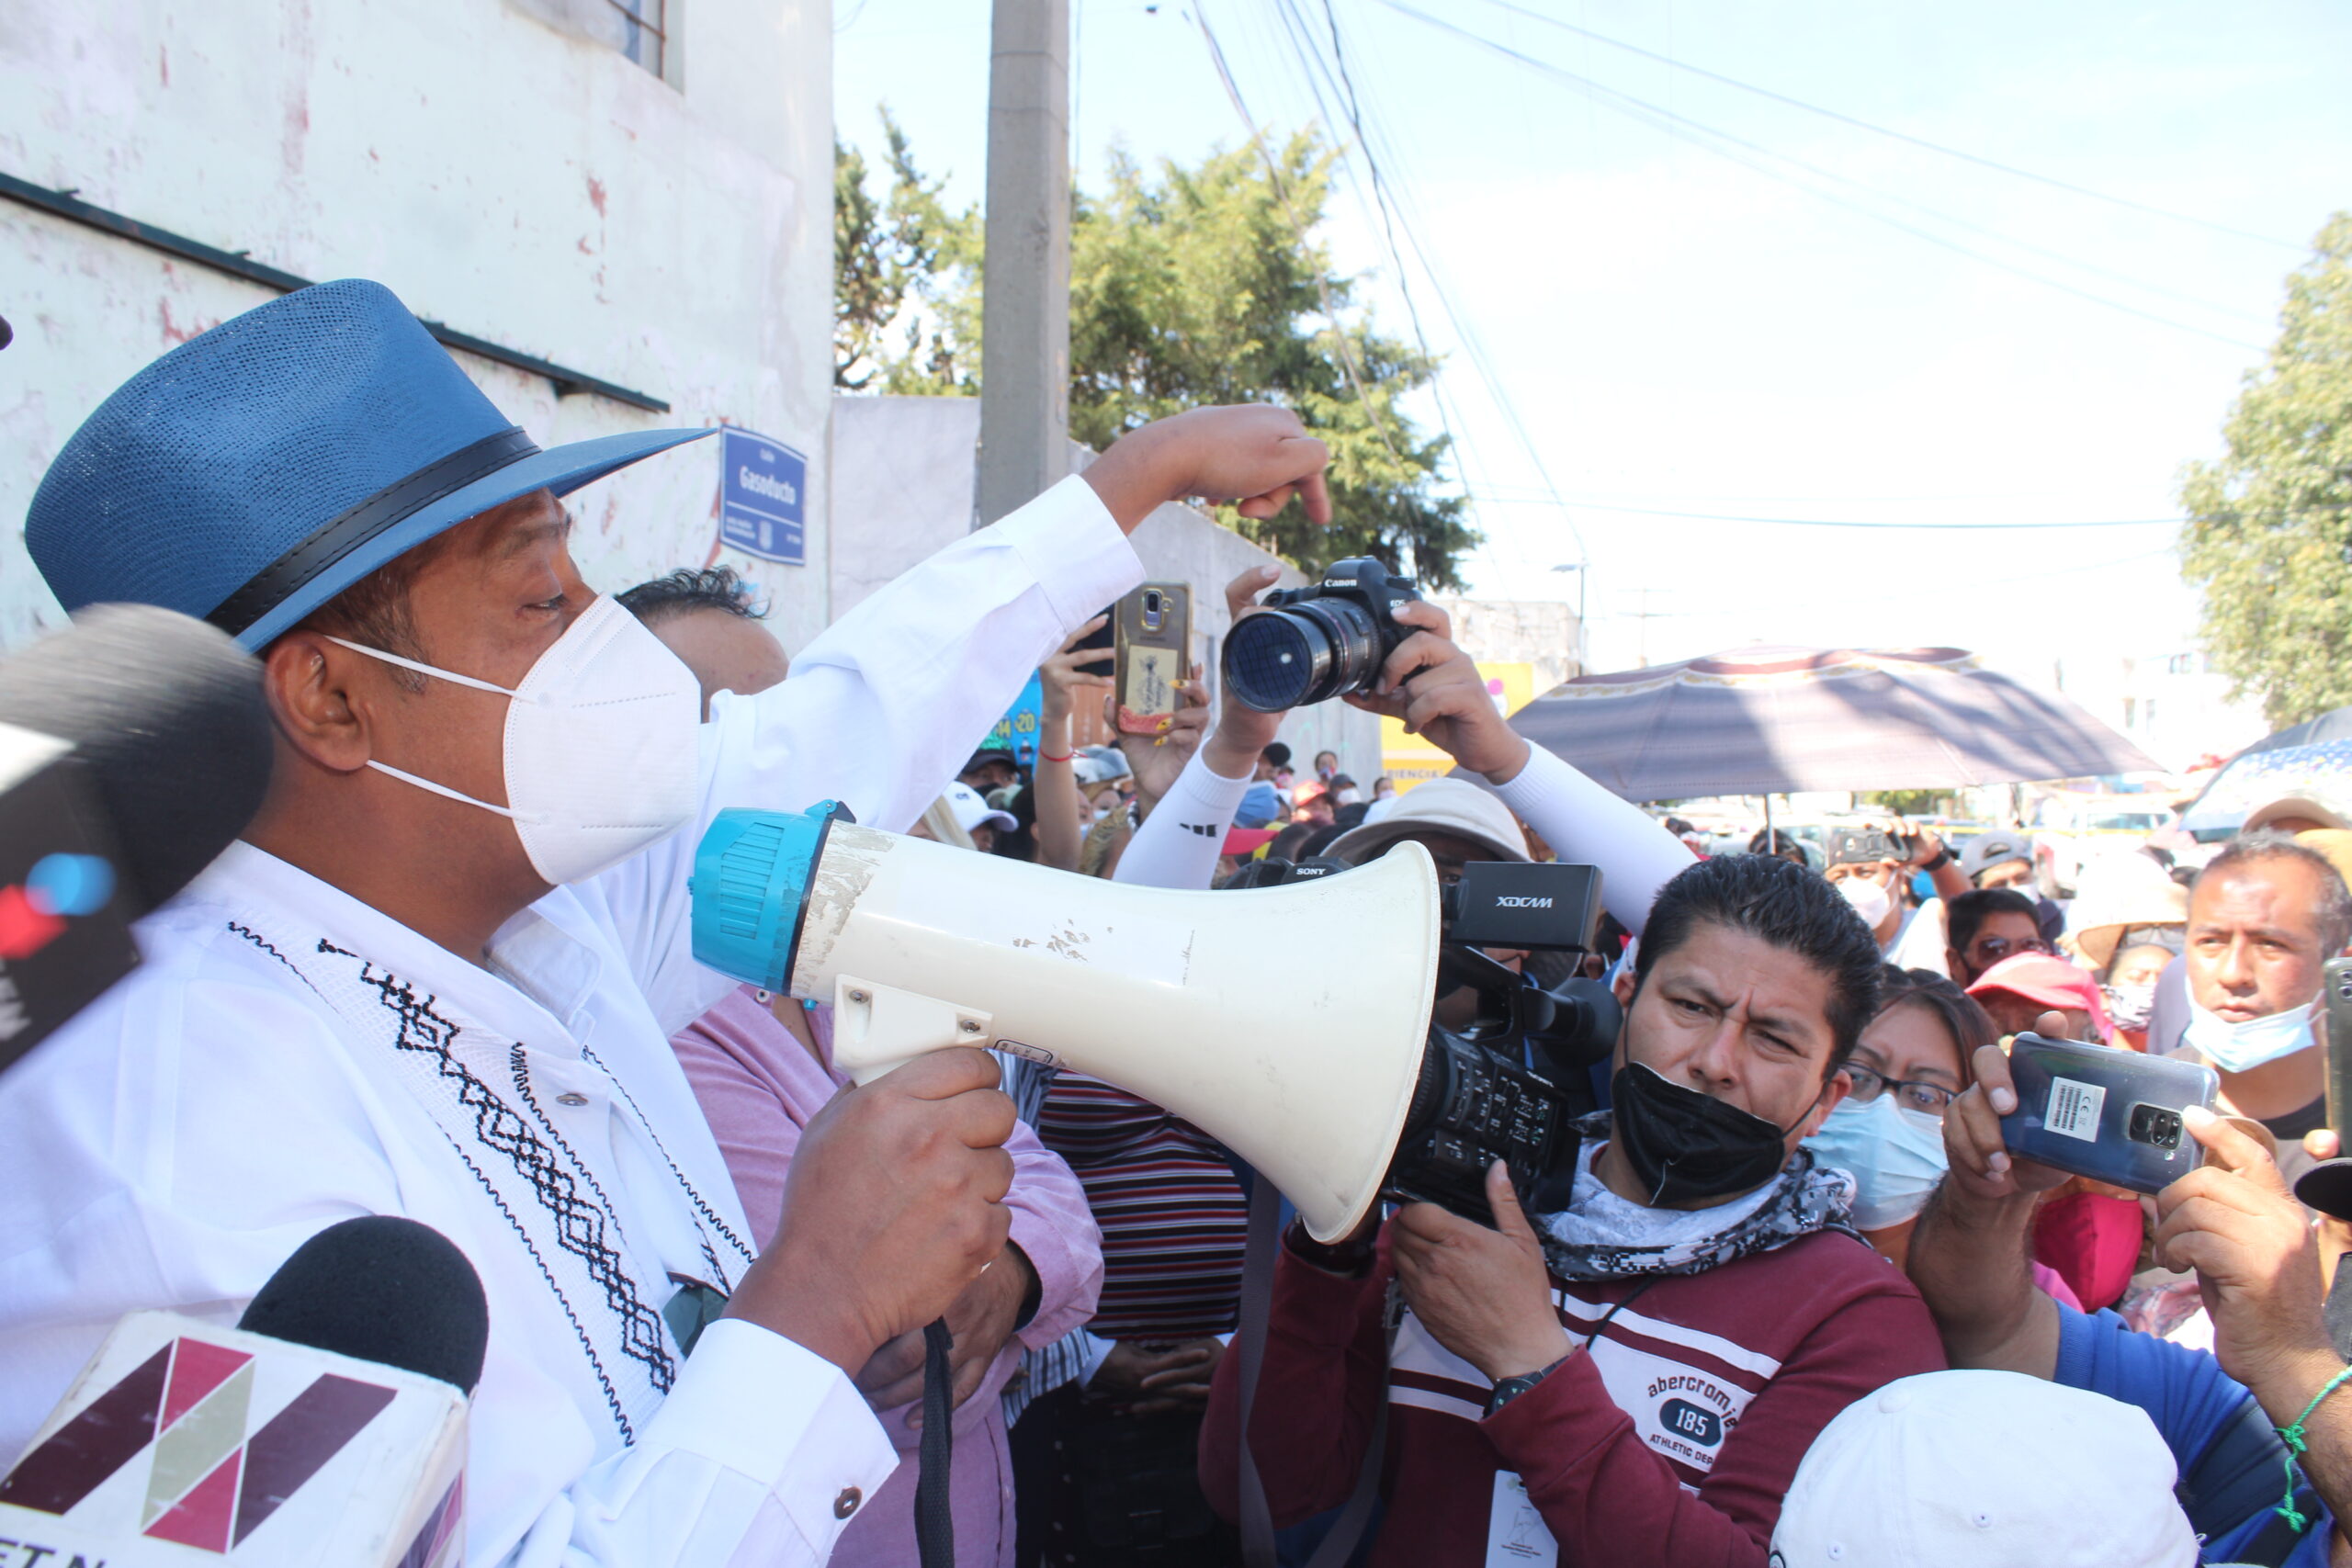 pobladores, San Pablo Xochimehuacan, representantes de gobernación, redes sociales, reunión, delincuencia organizada, demandas